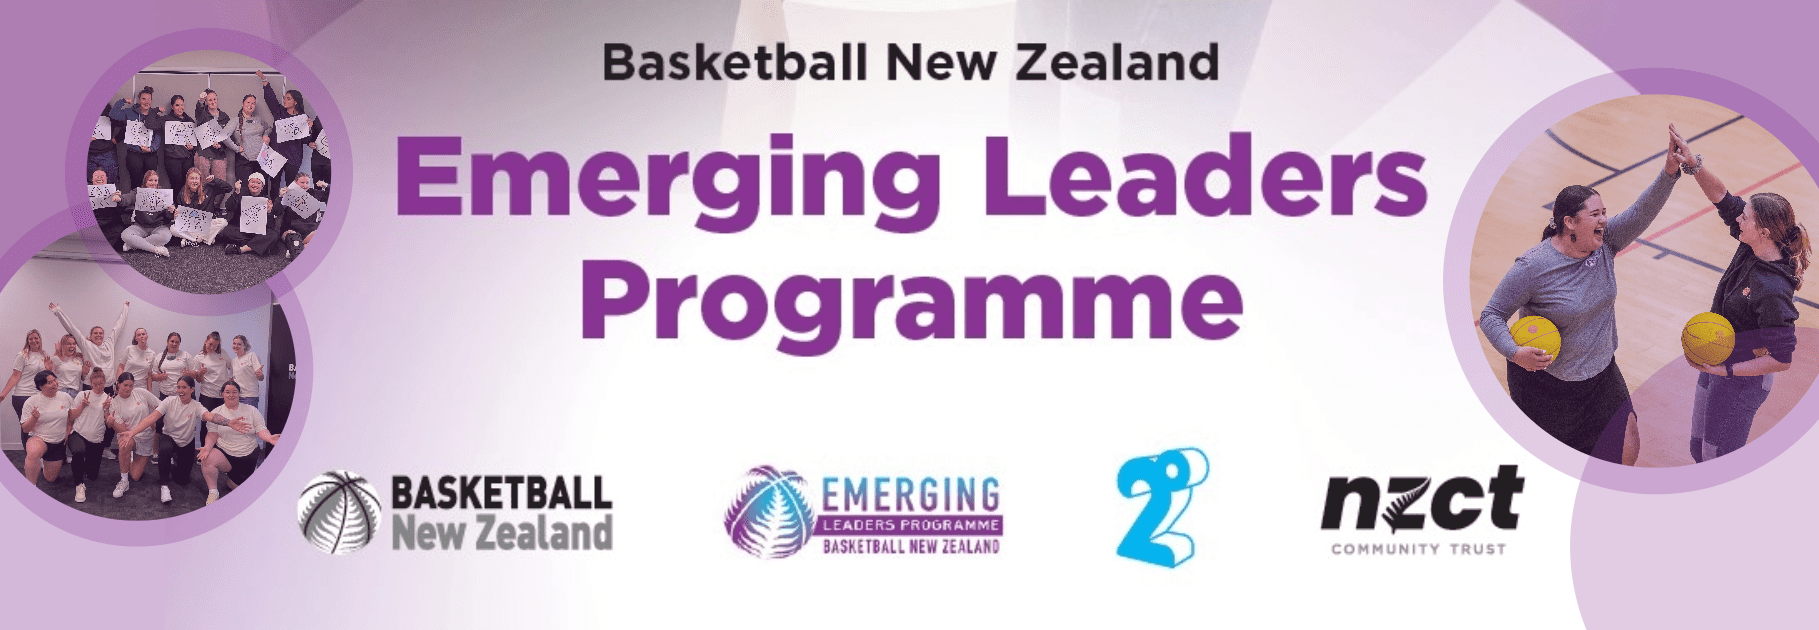 Launch of Basketball New Zealand Emerging Leaders Programme!